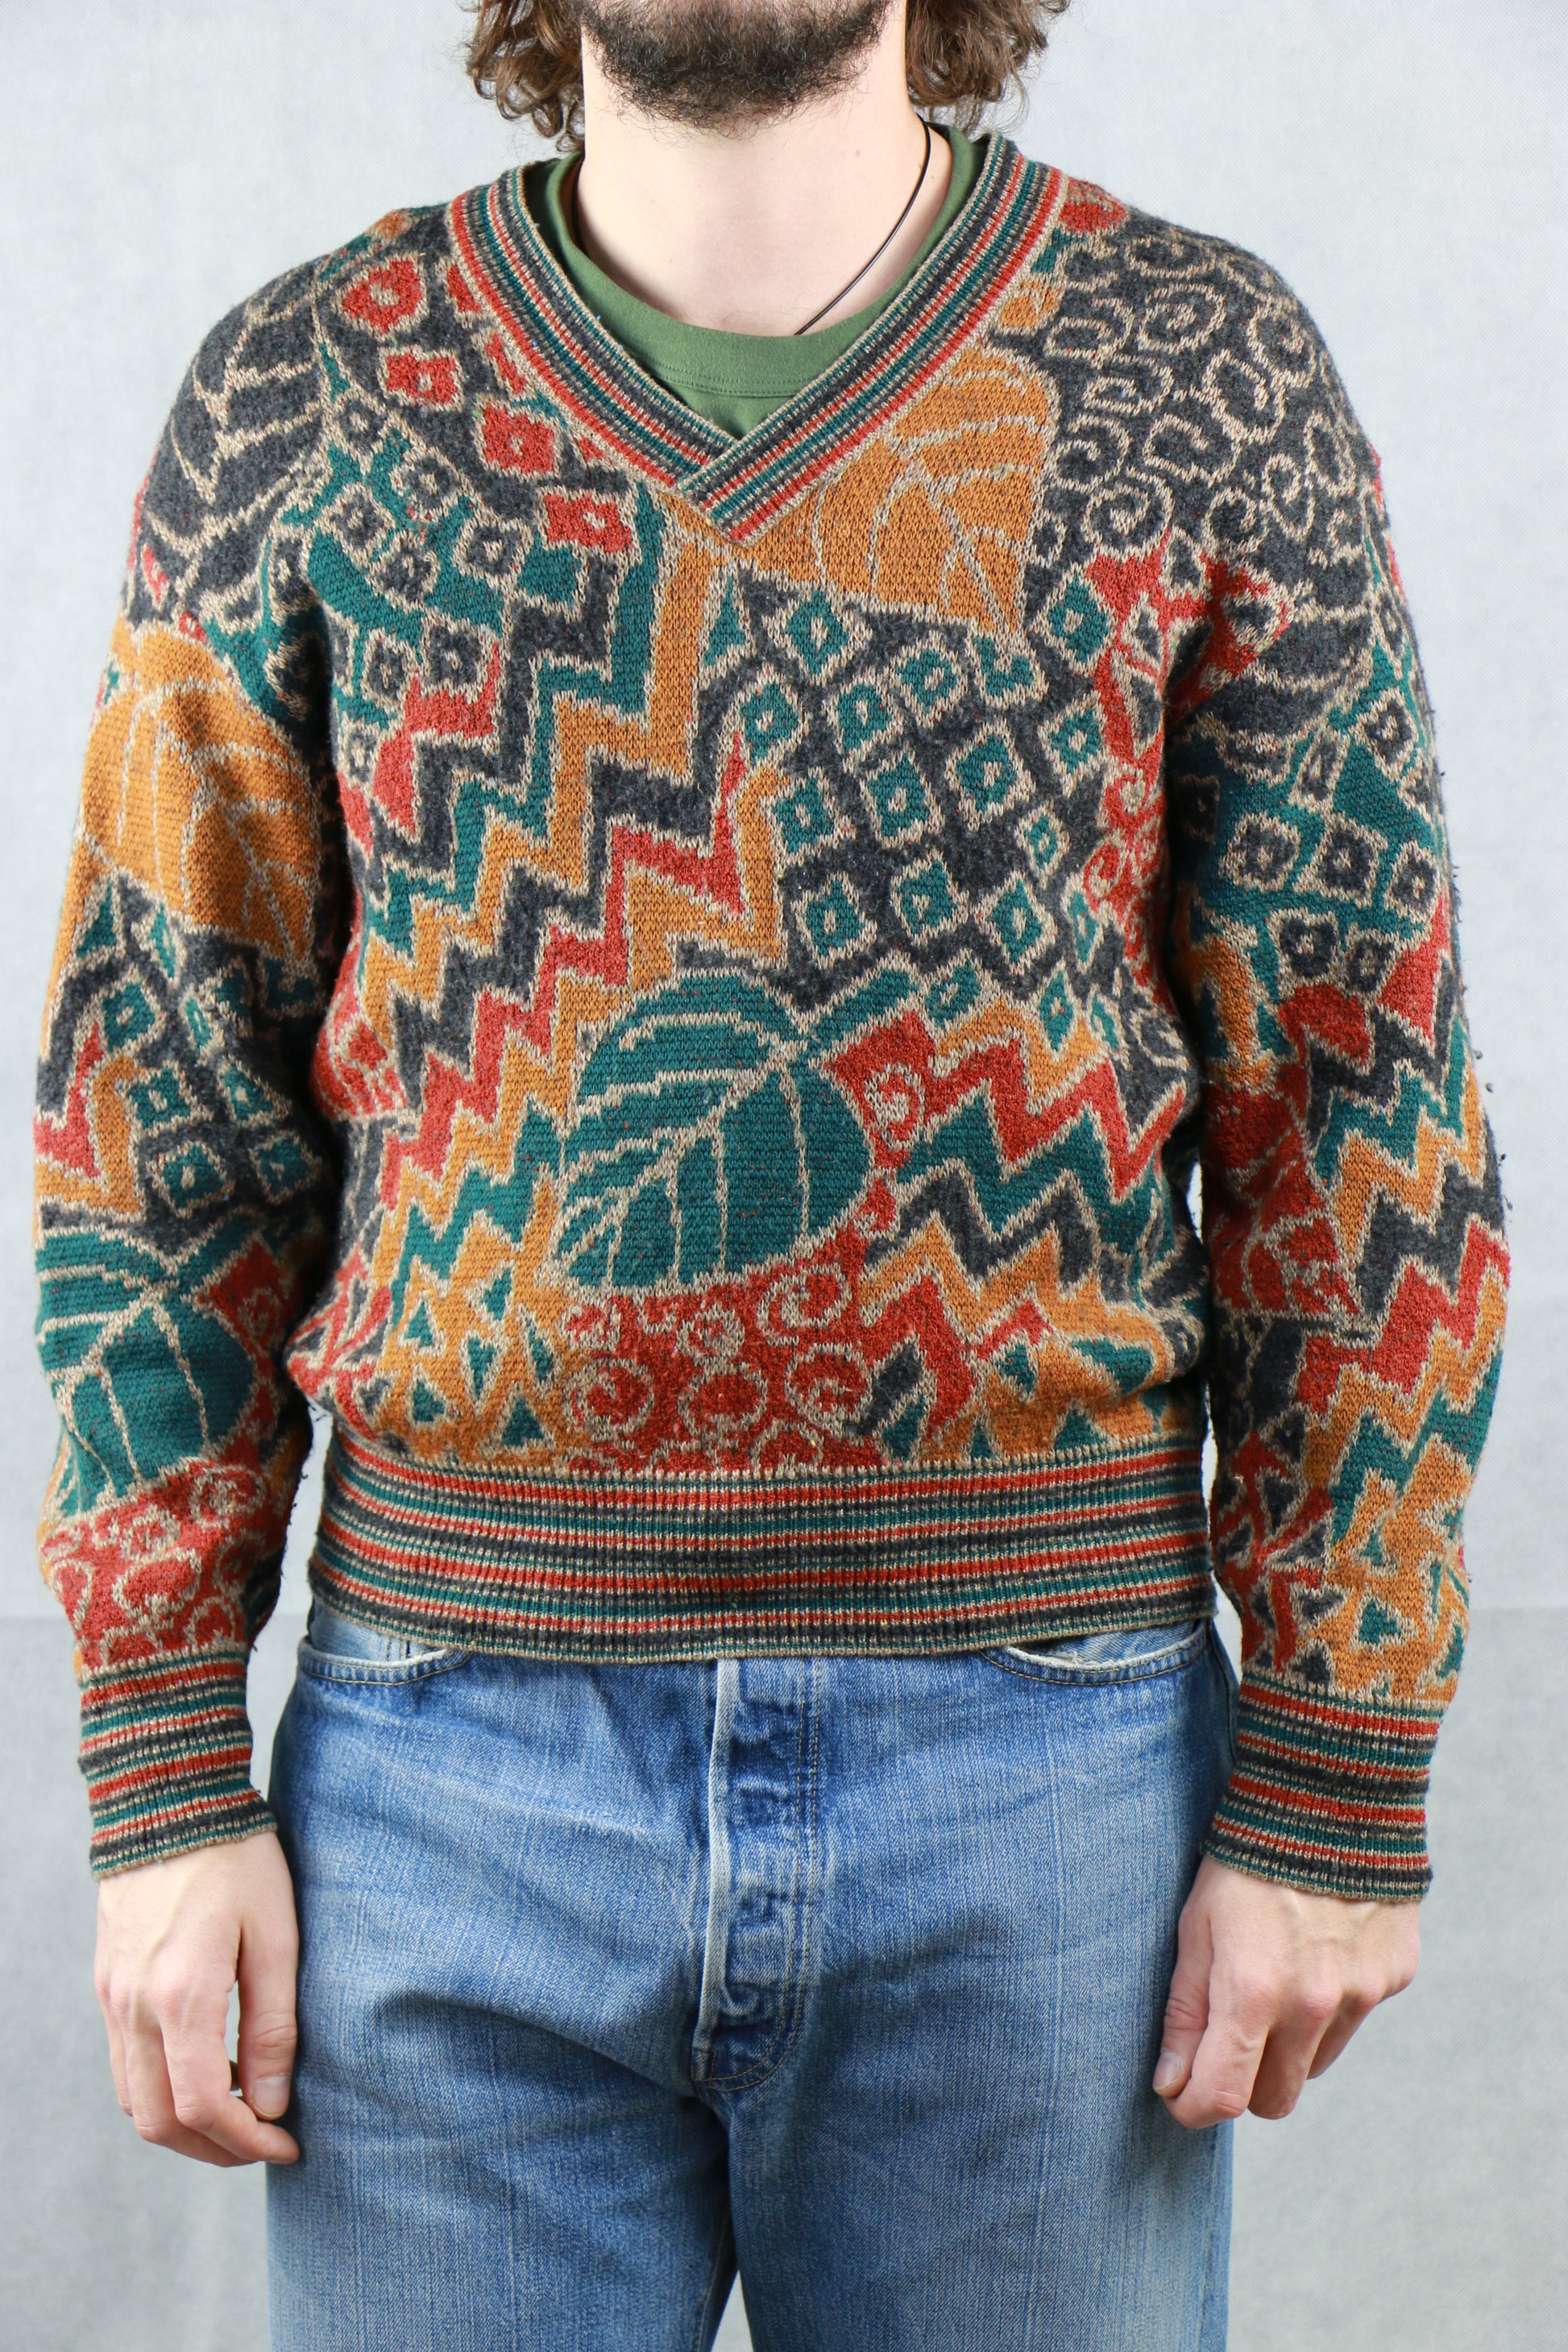 Missoni Sport Sweater, vintage store clochard92.com